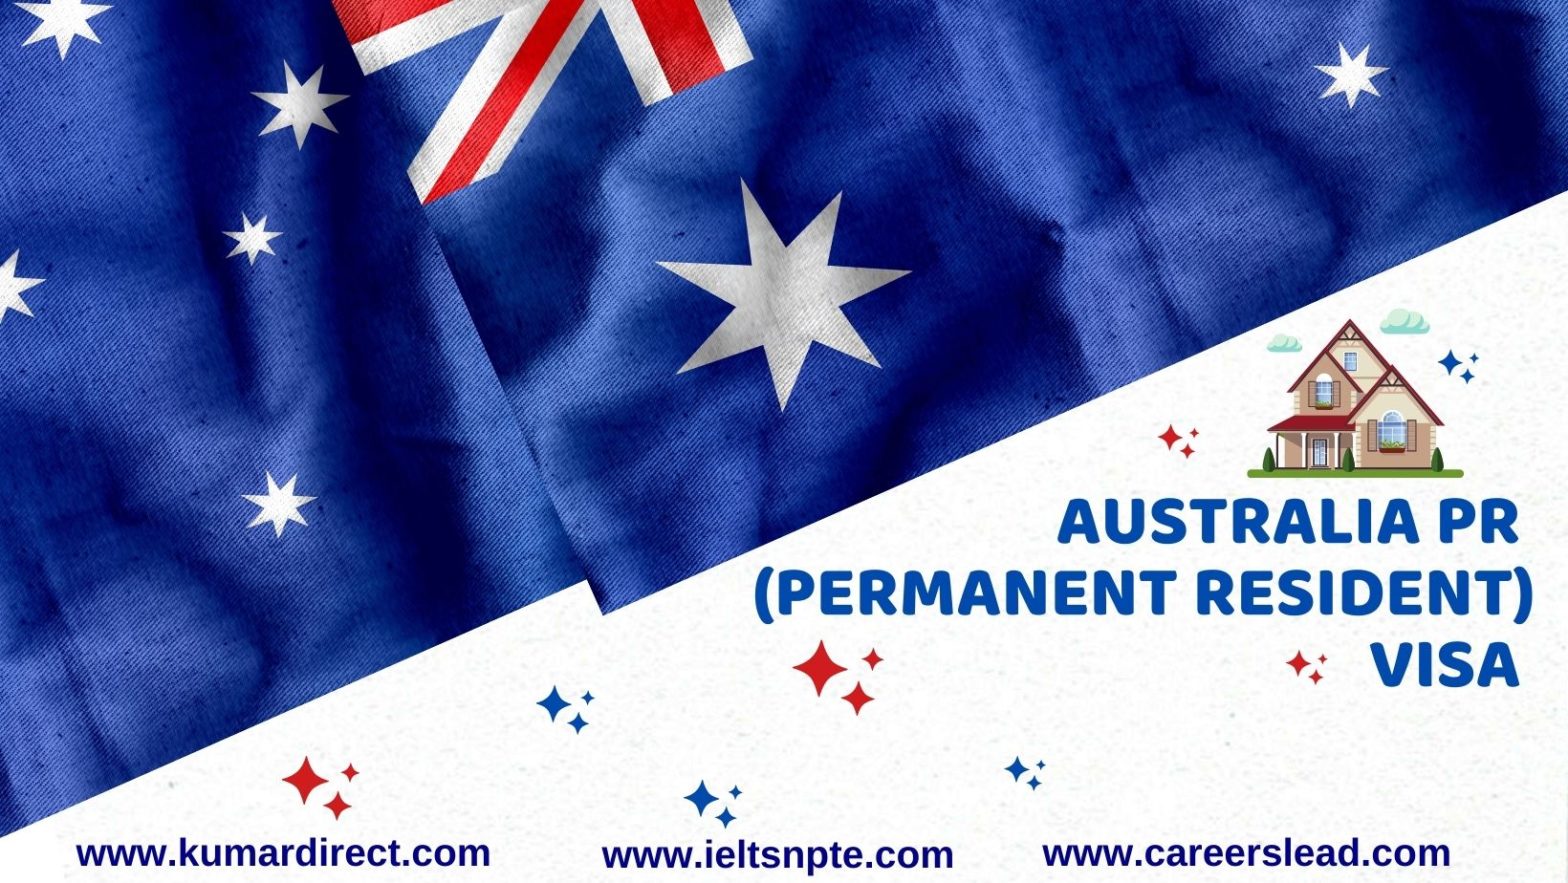 AUSTRALIA PR (Permanent Resident) Visa